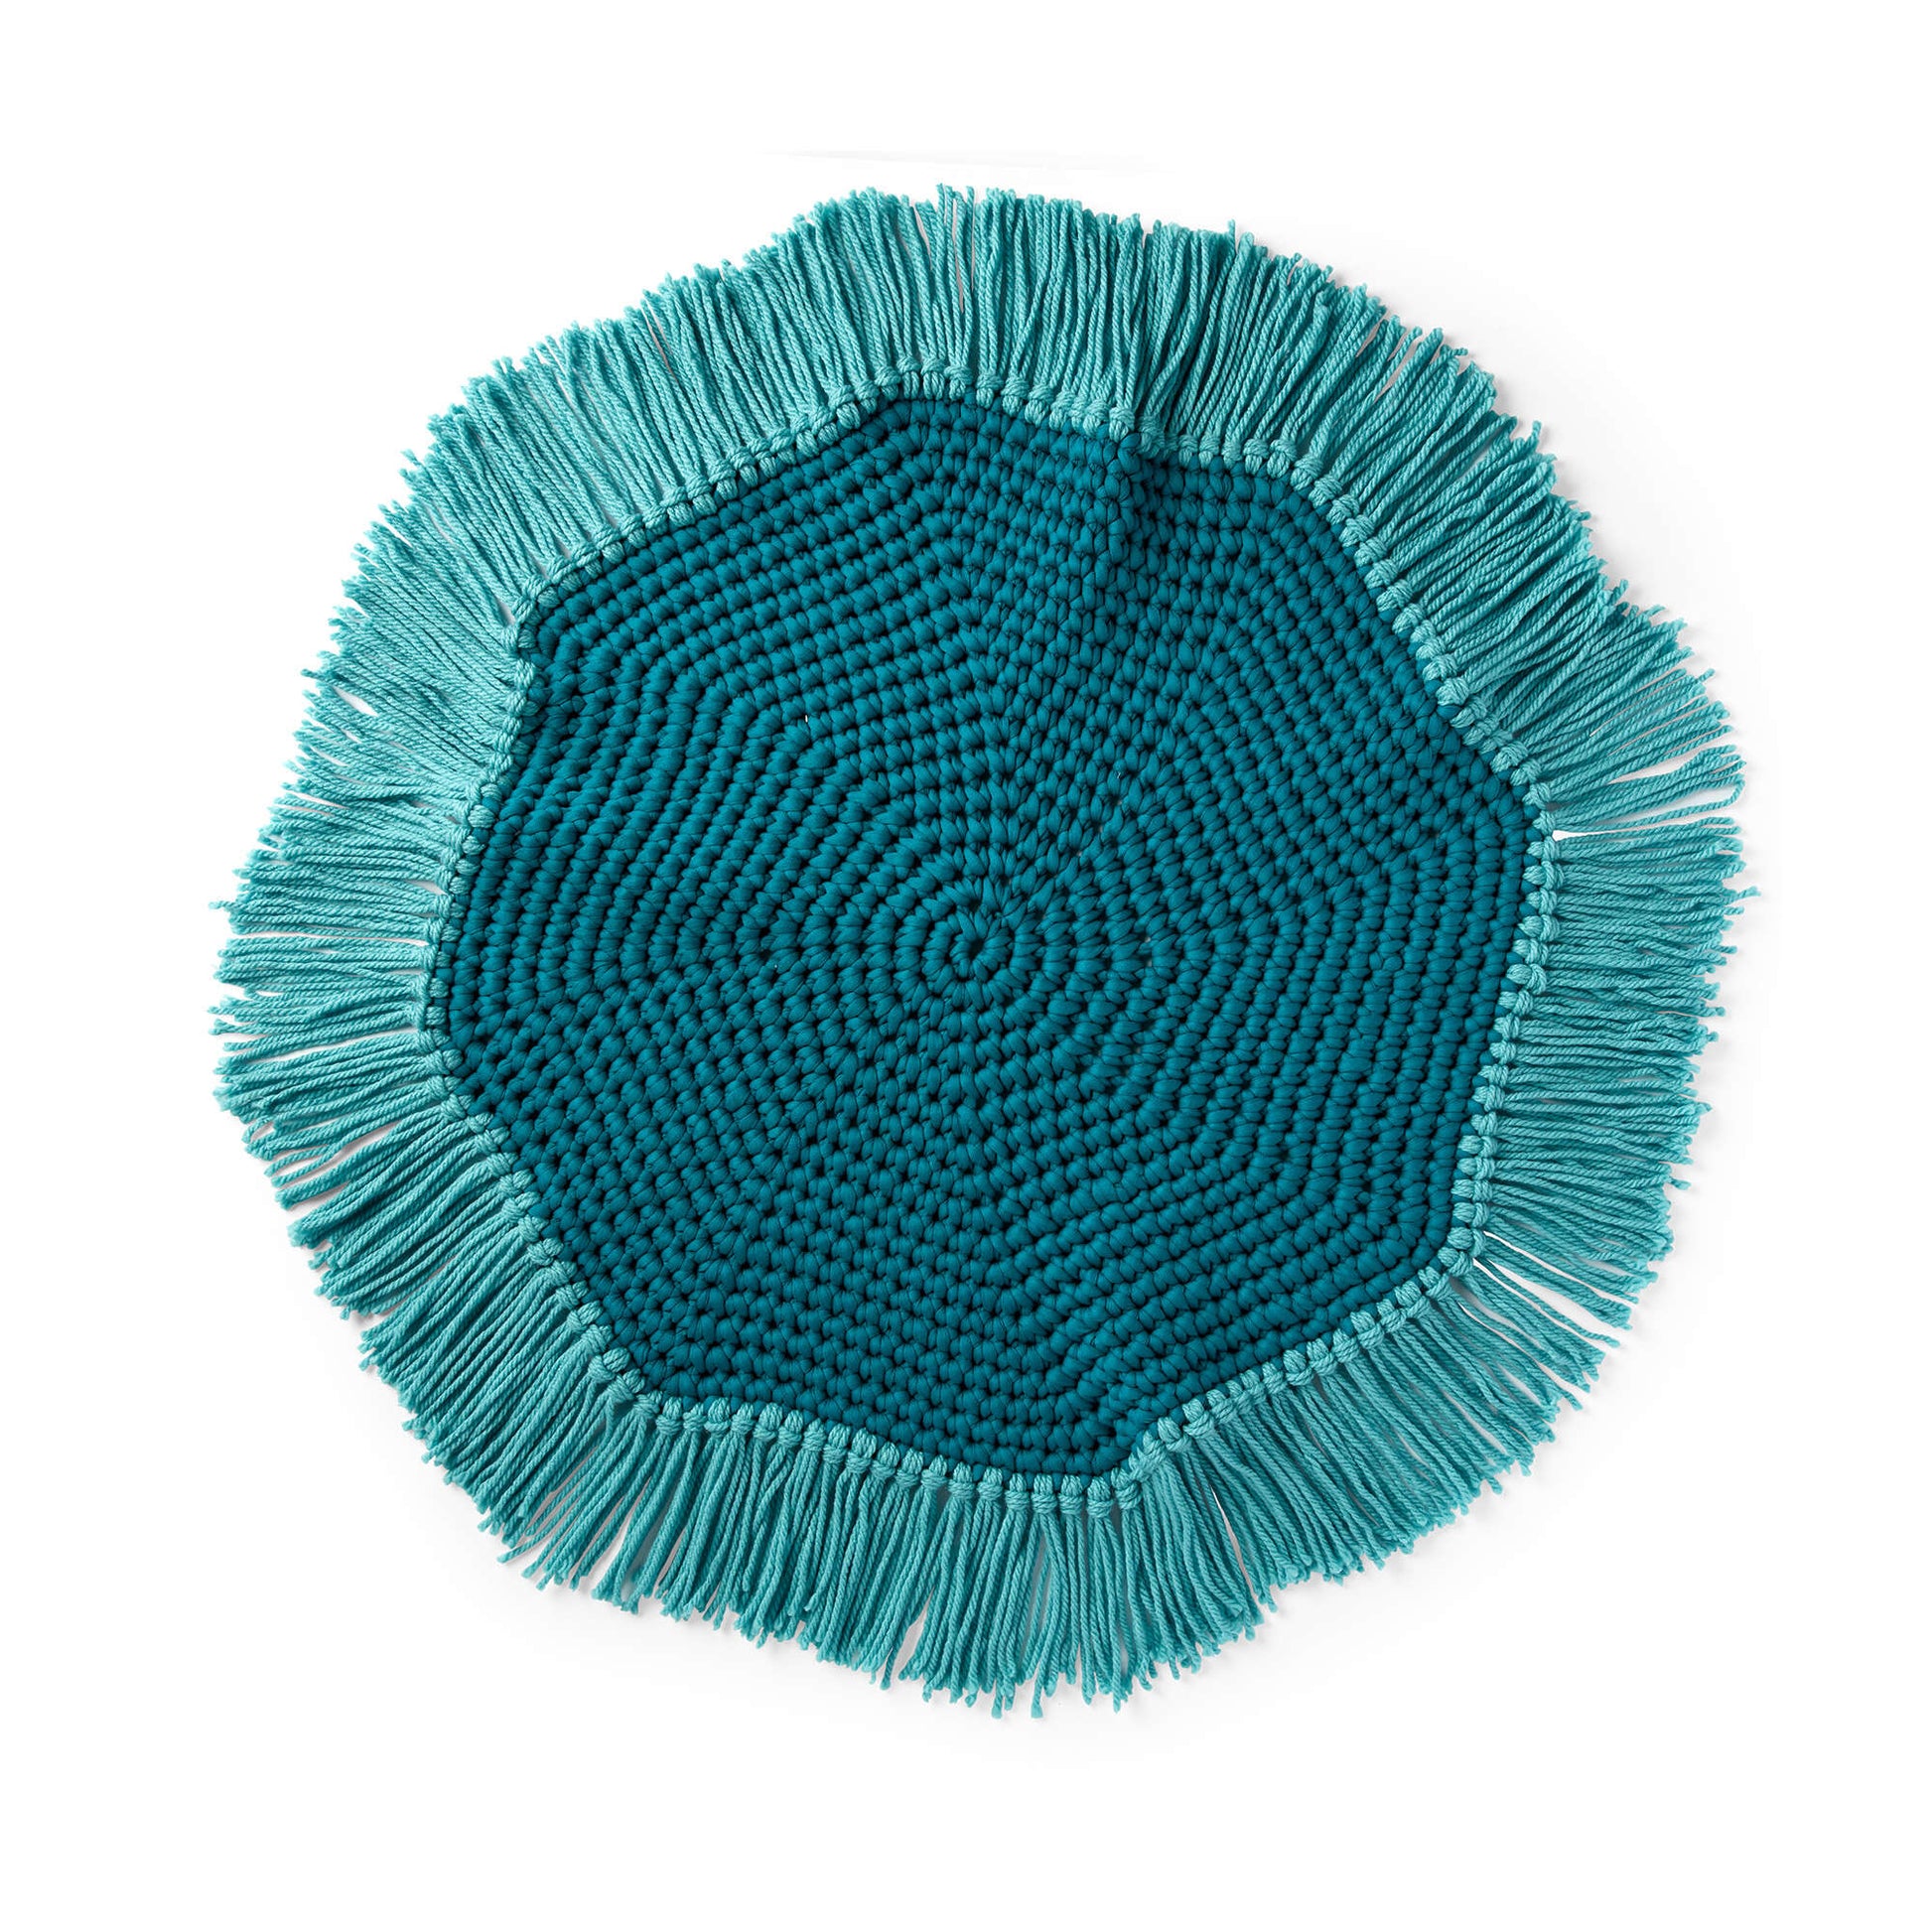 Bernat Crochet Round Fringe Rug Crochet Poncho made in Bernat Maker Big yarn